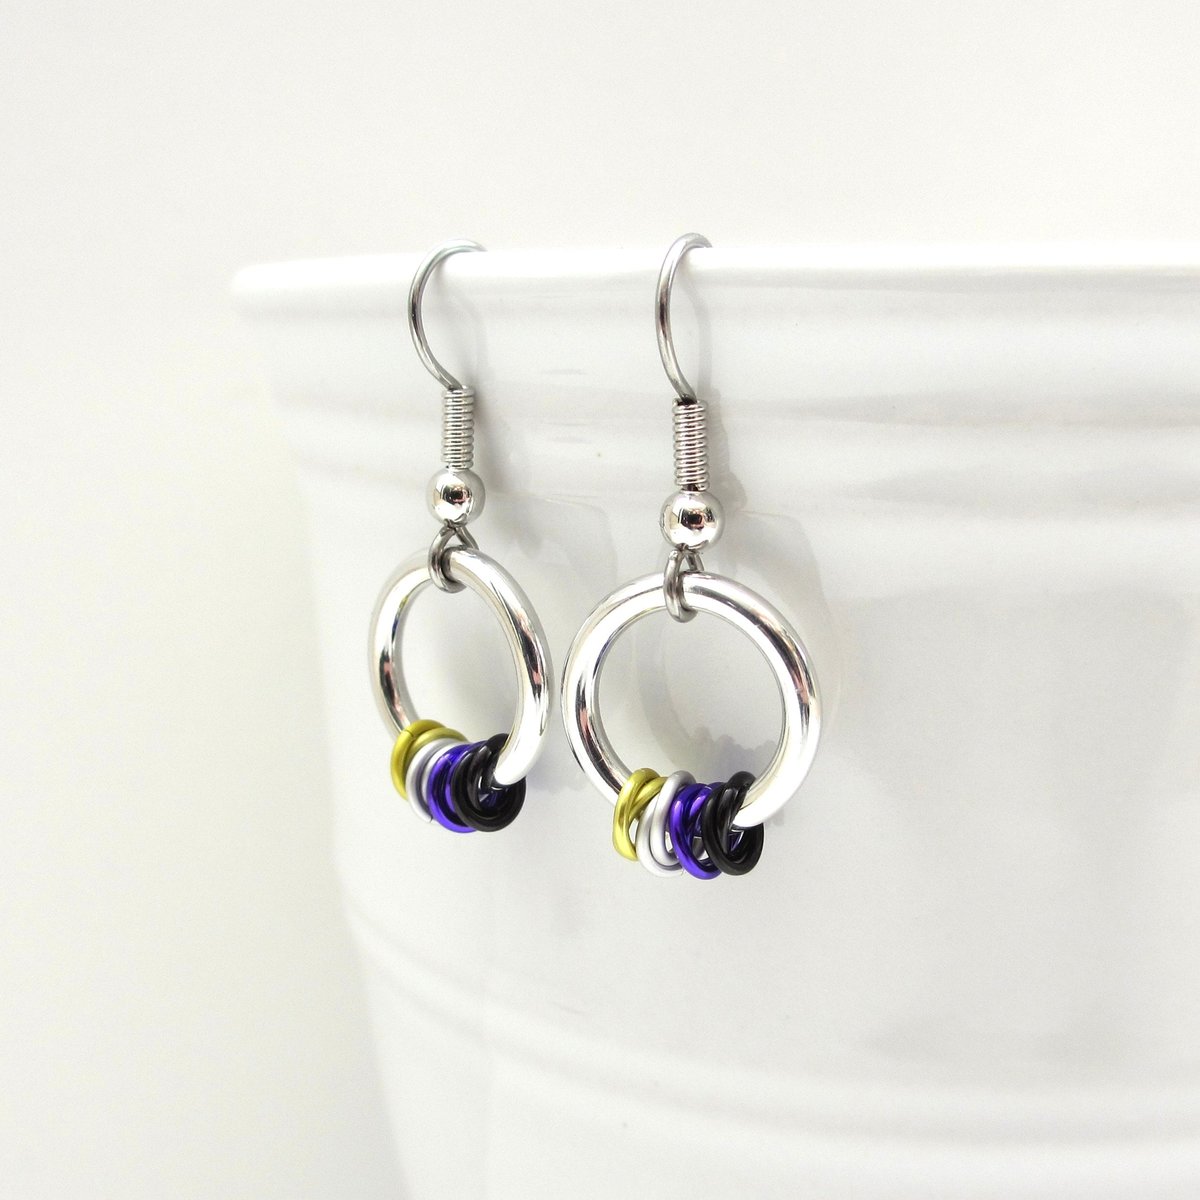 Nonbinary pride earrings, subtle LGBTQ pride jewelry; yellow, white, purple, black